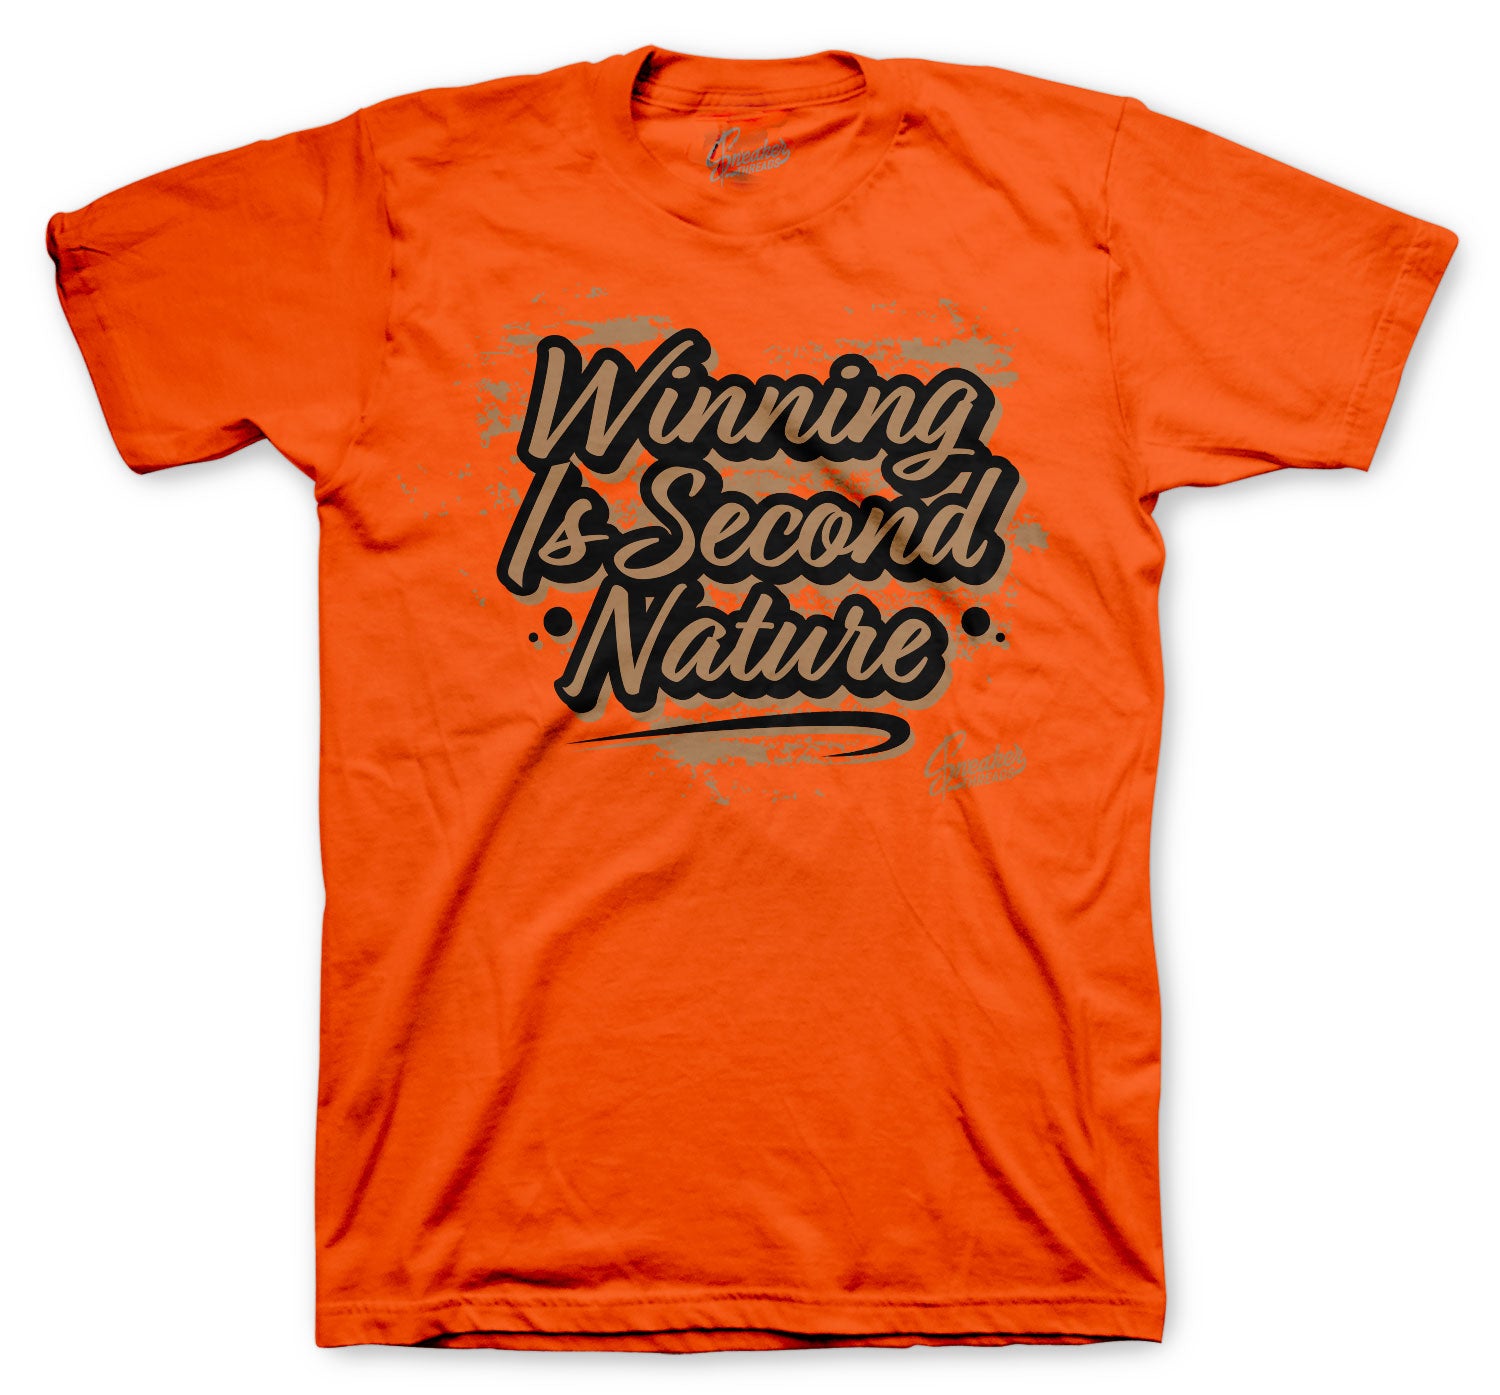 Retro 14 Winterized Shirt - Second Nature - Orange